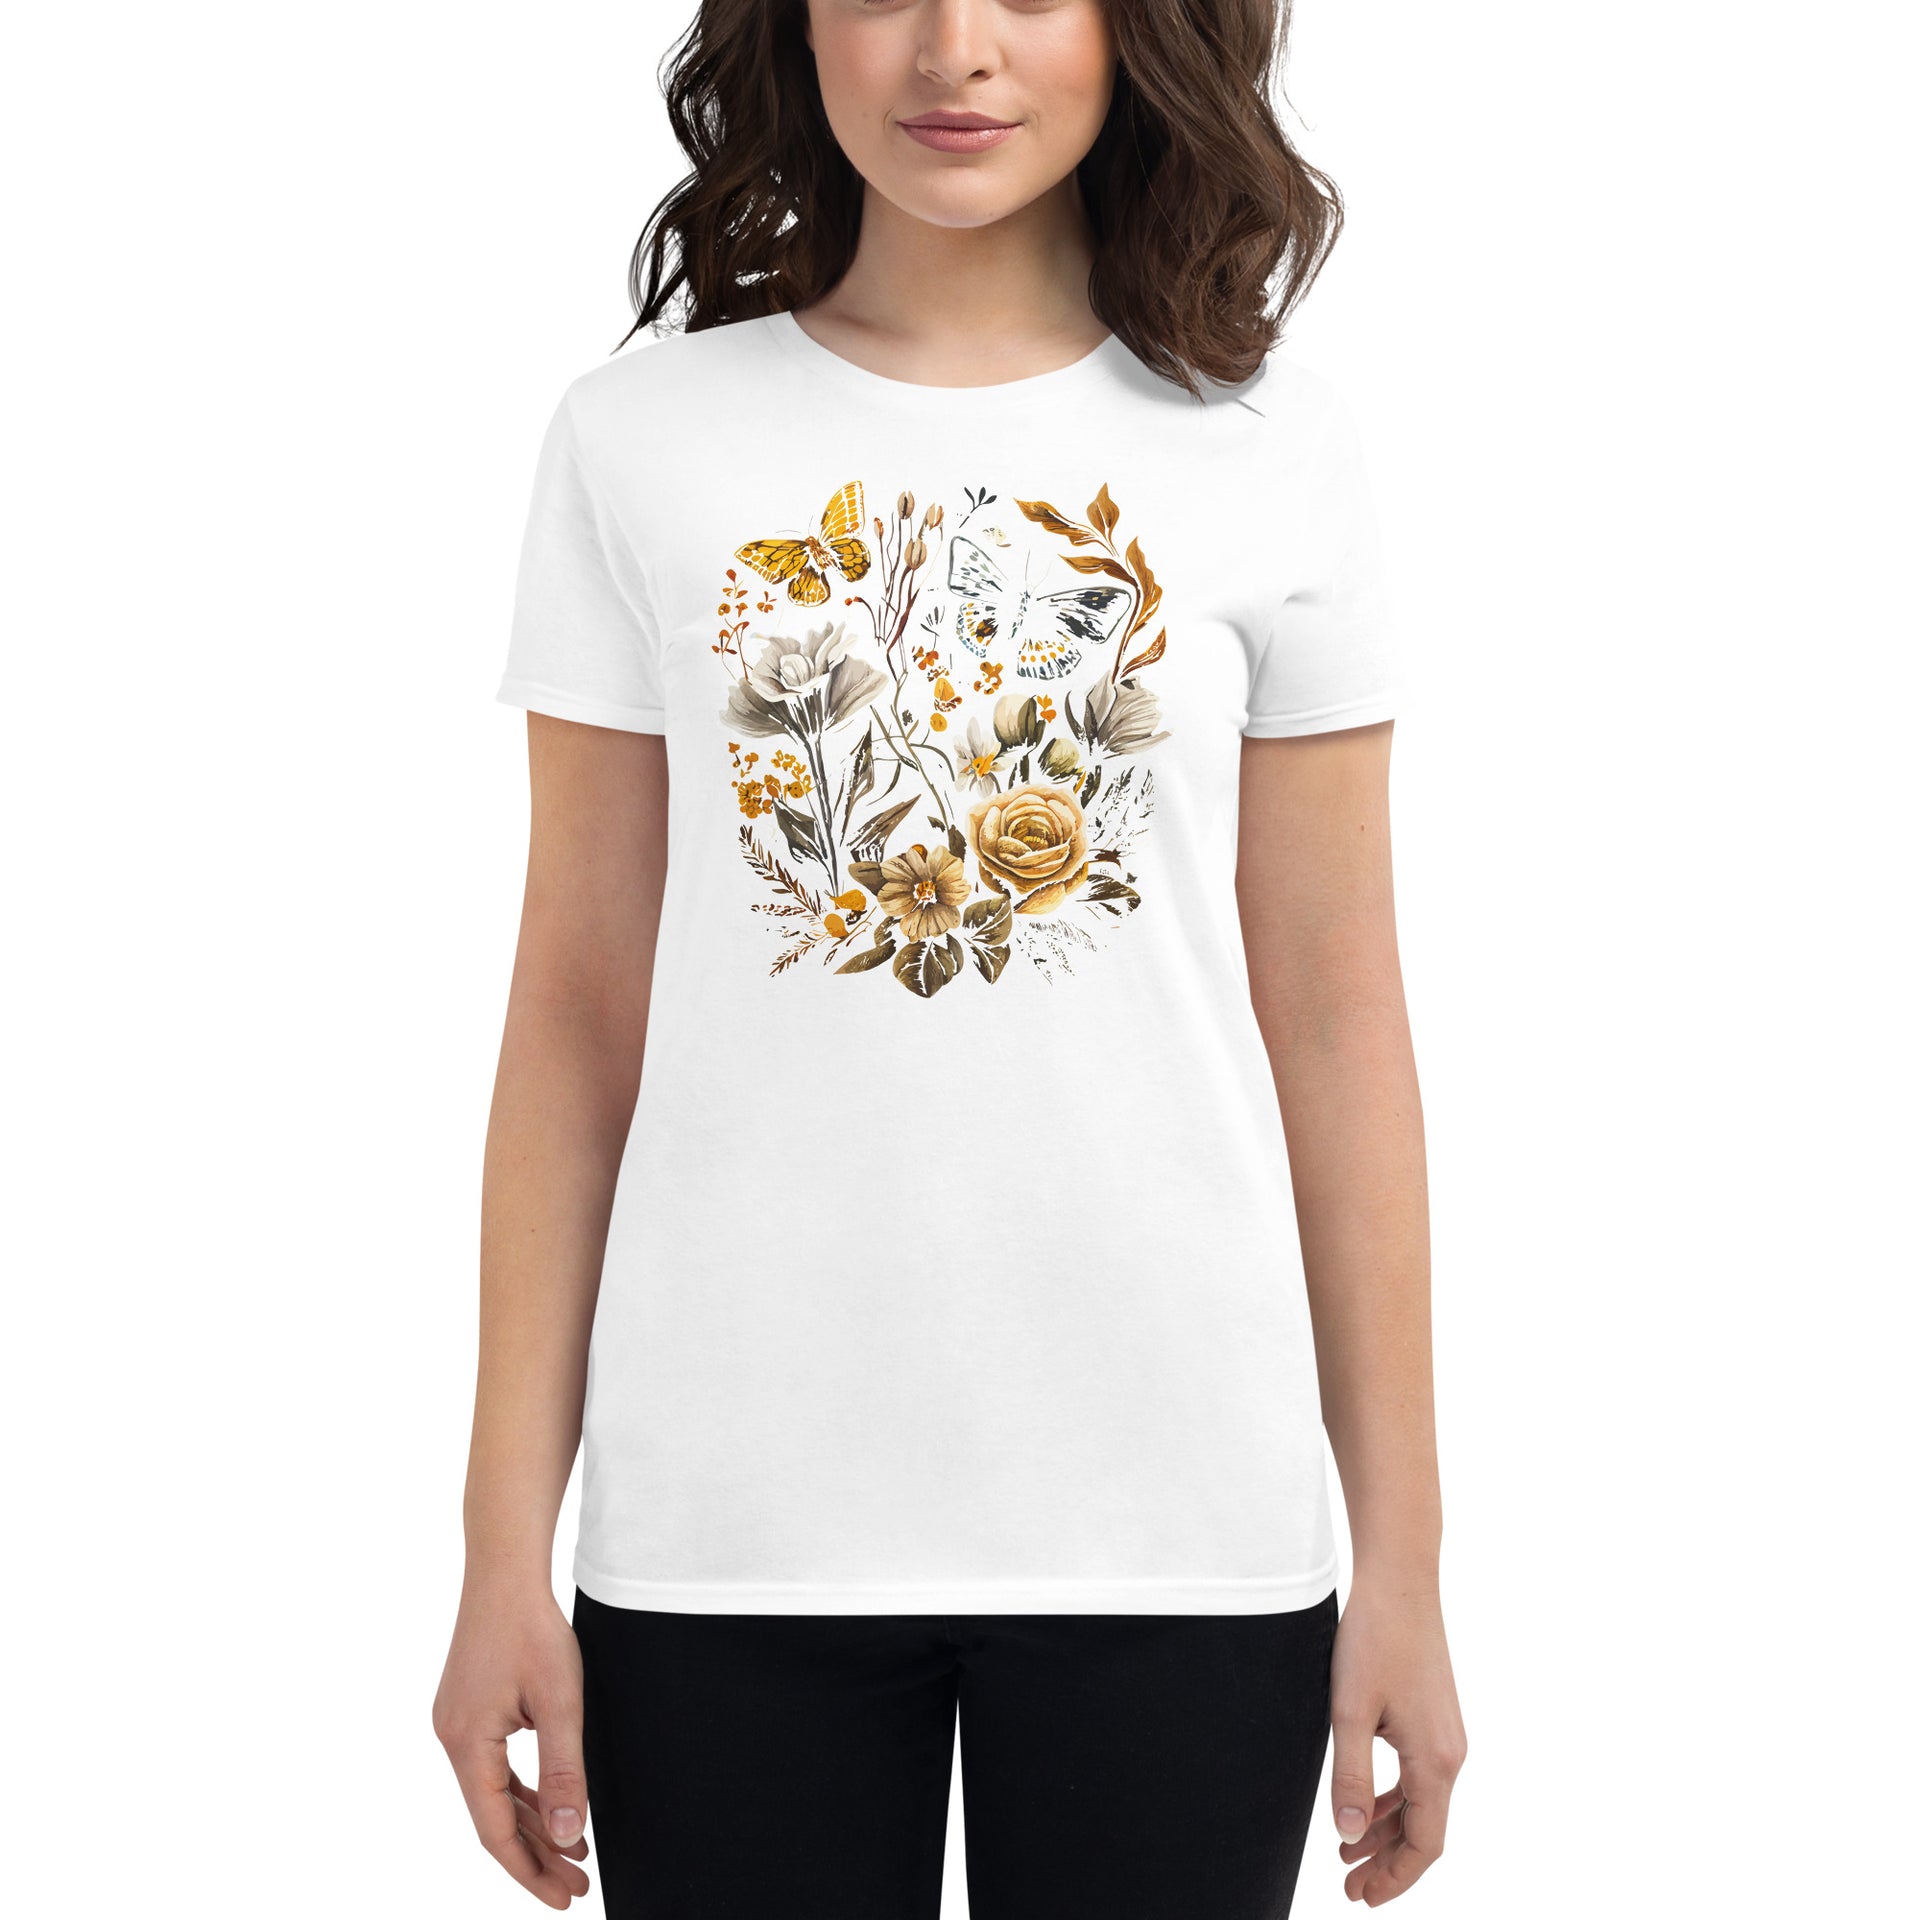 Botanical Flowers Women's T-Shirt